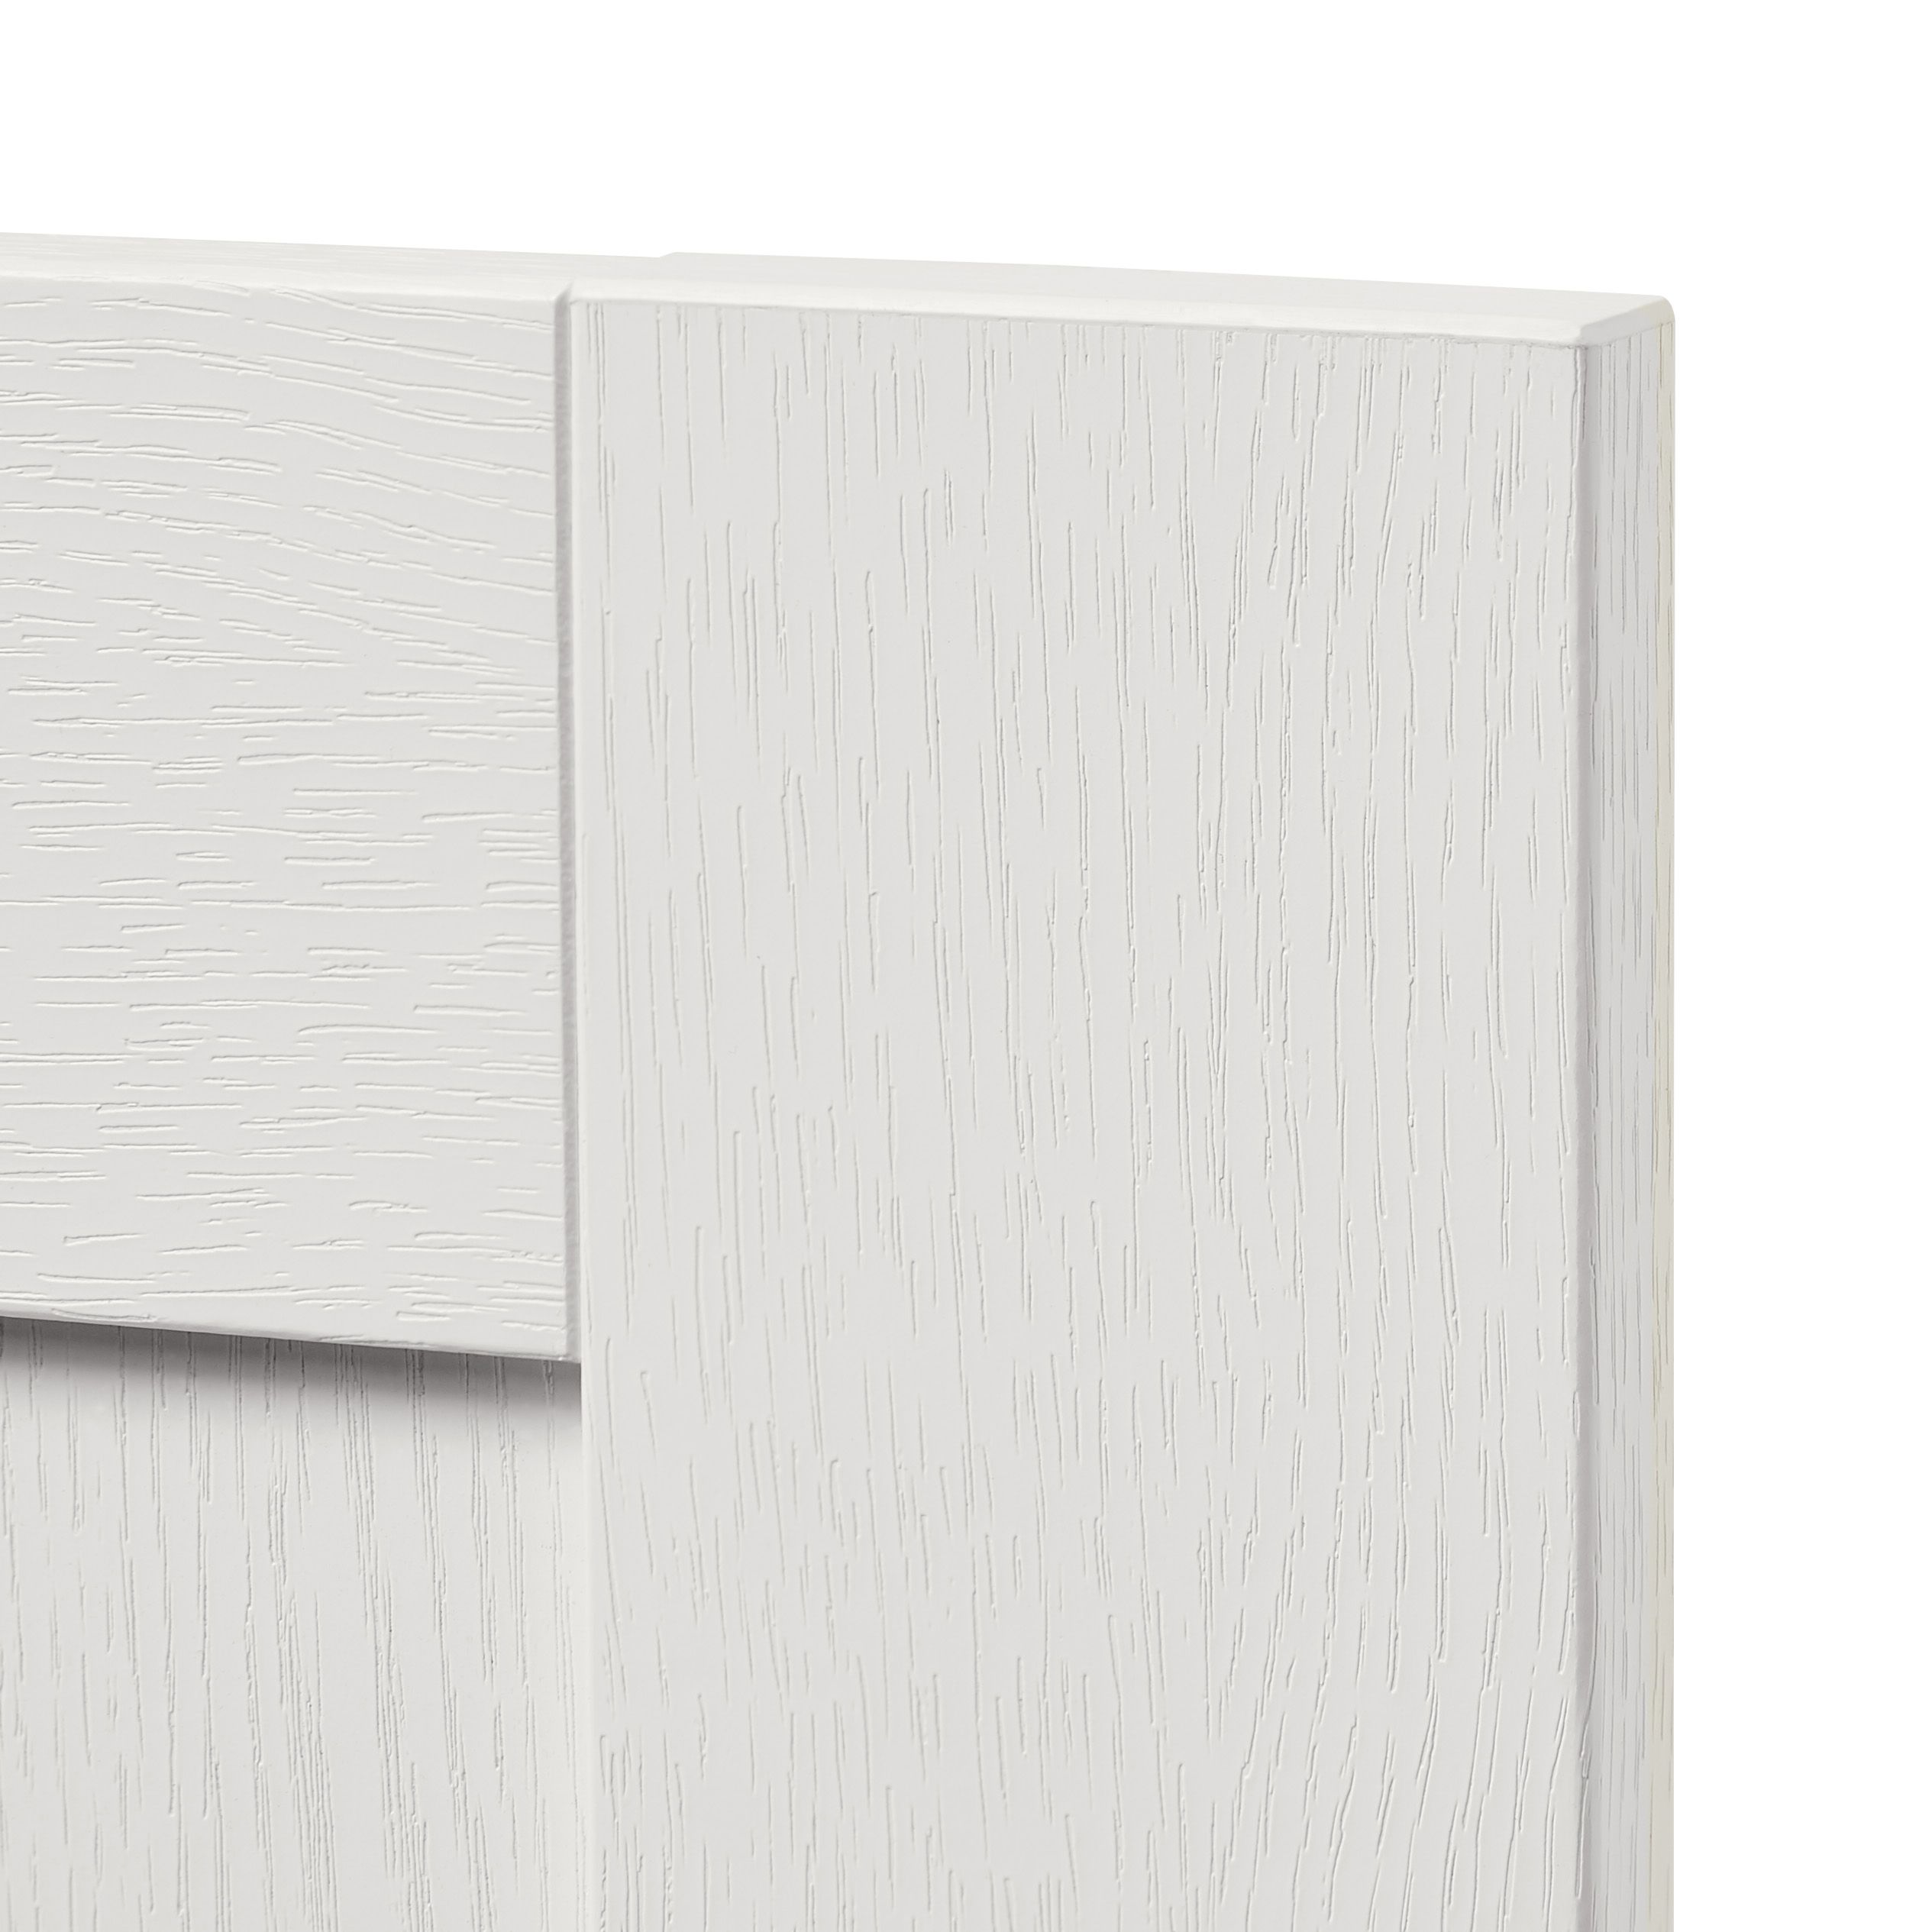 GoodHome Alpinia Matt ivory painted wood effect shaker Tall wall Cabinet door (W)250mm (H)895mm (T)18mm